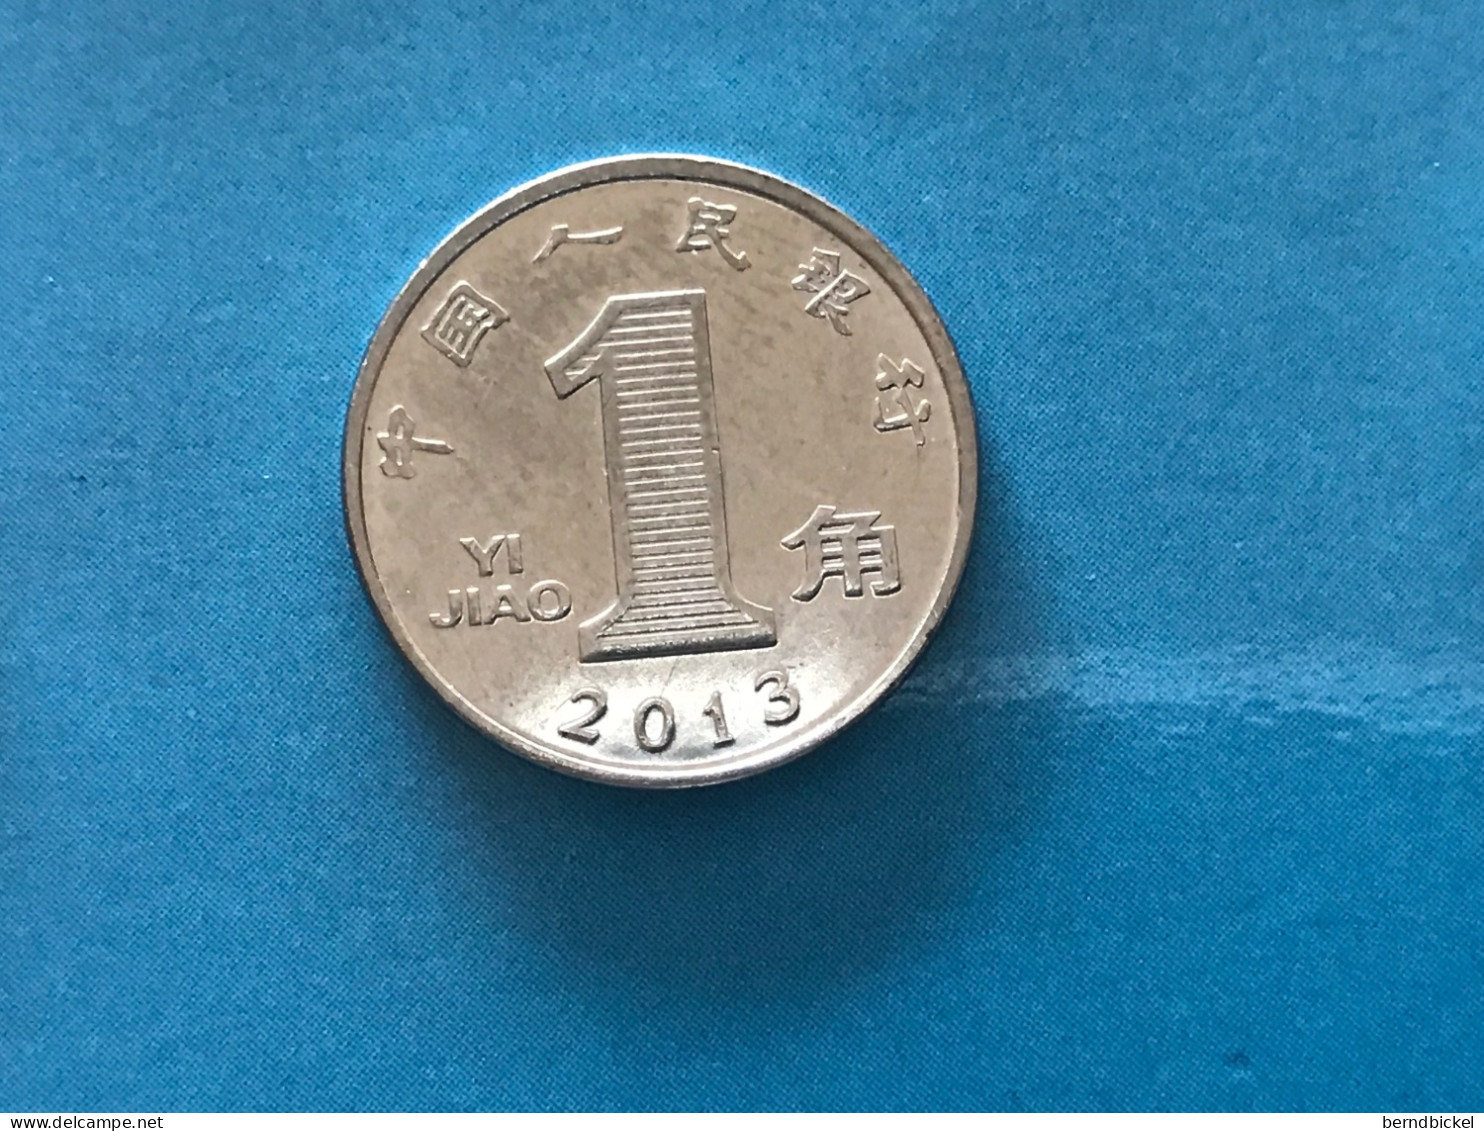 Münze Münzen Umlaufmünze China 1 Jiao 2013 - China